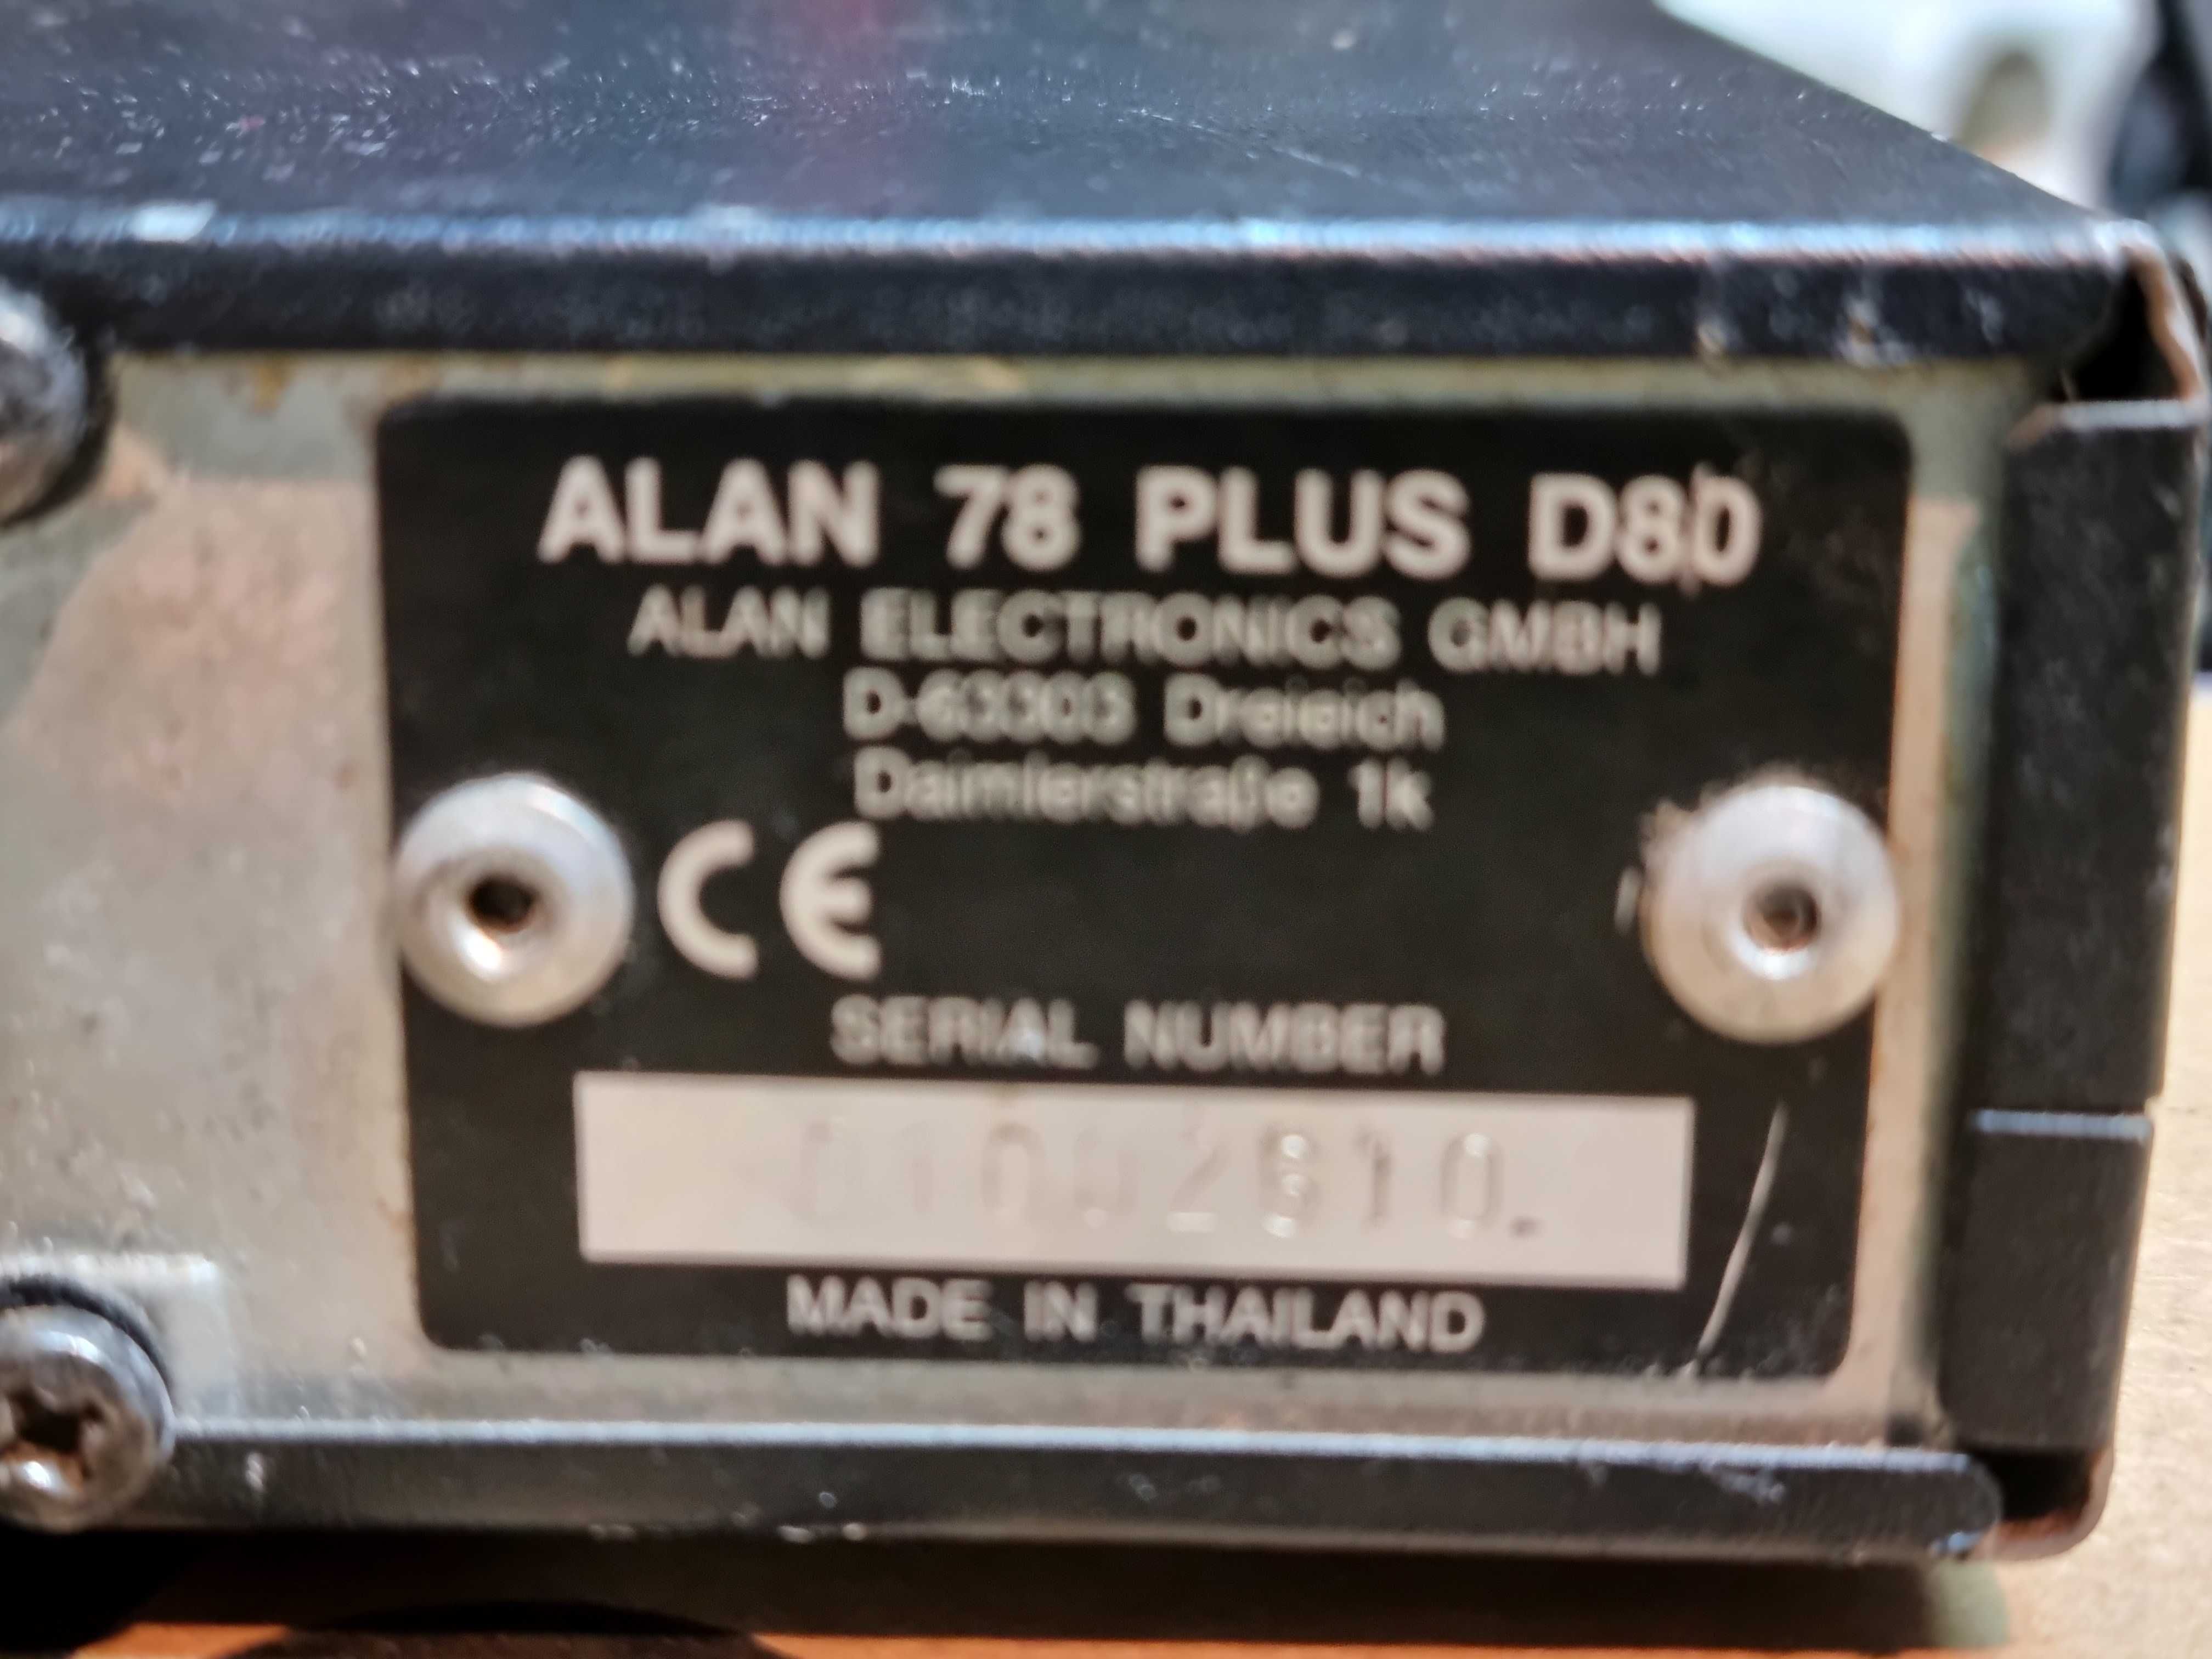 Statie radio CB Midland Alan 78 Plus